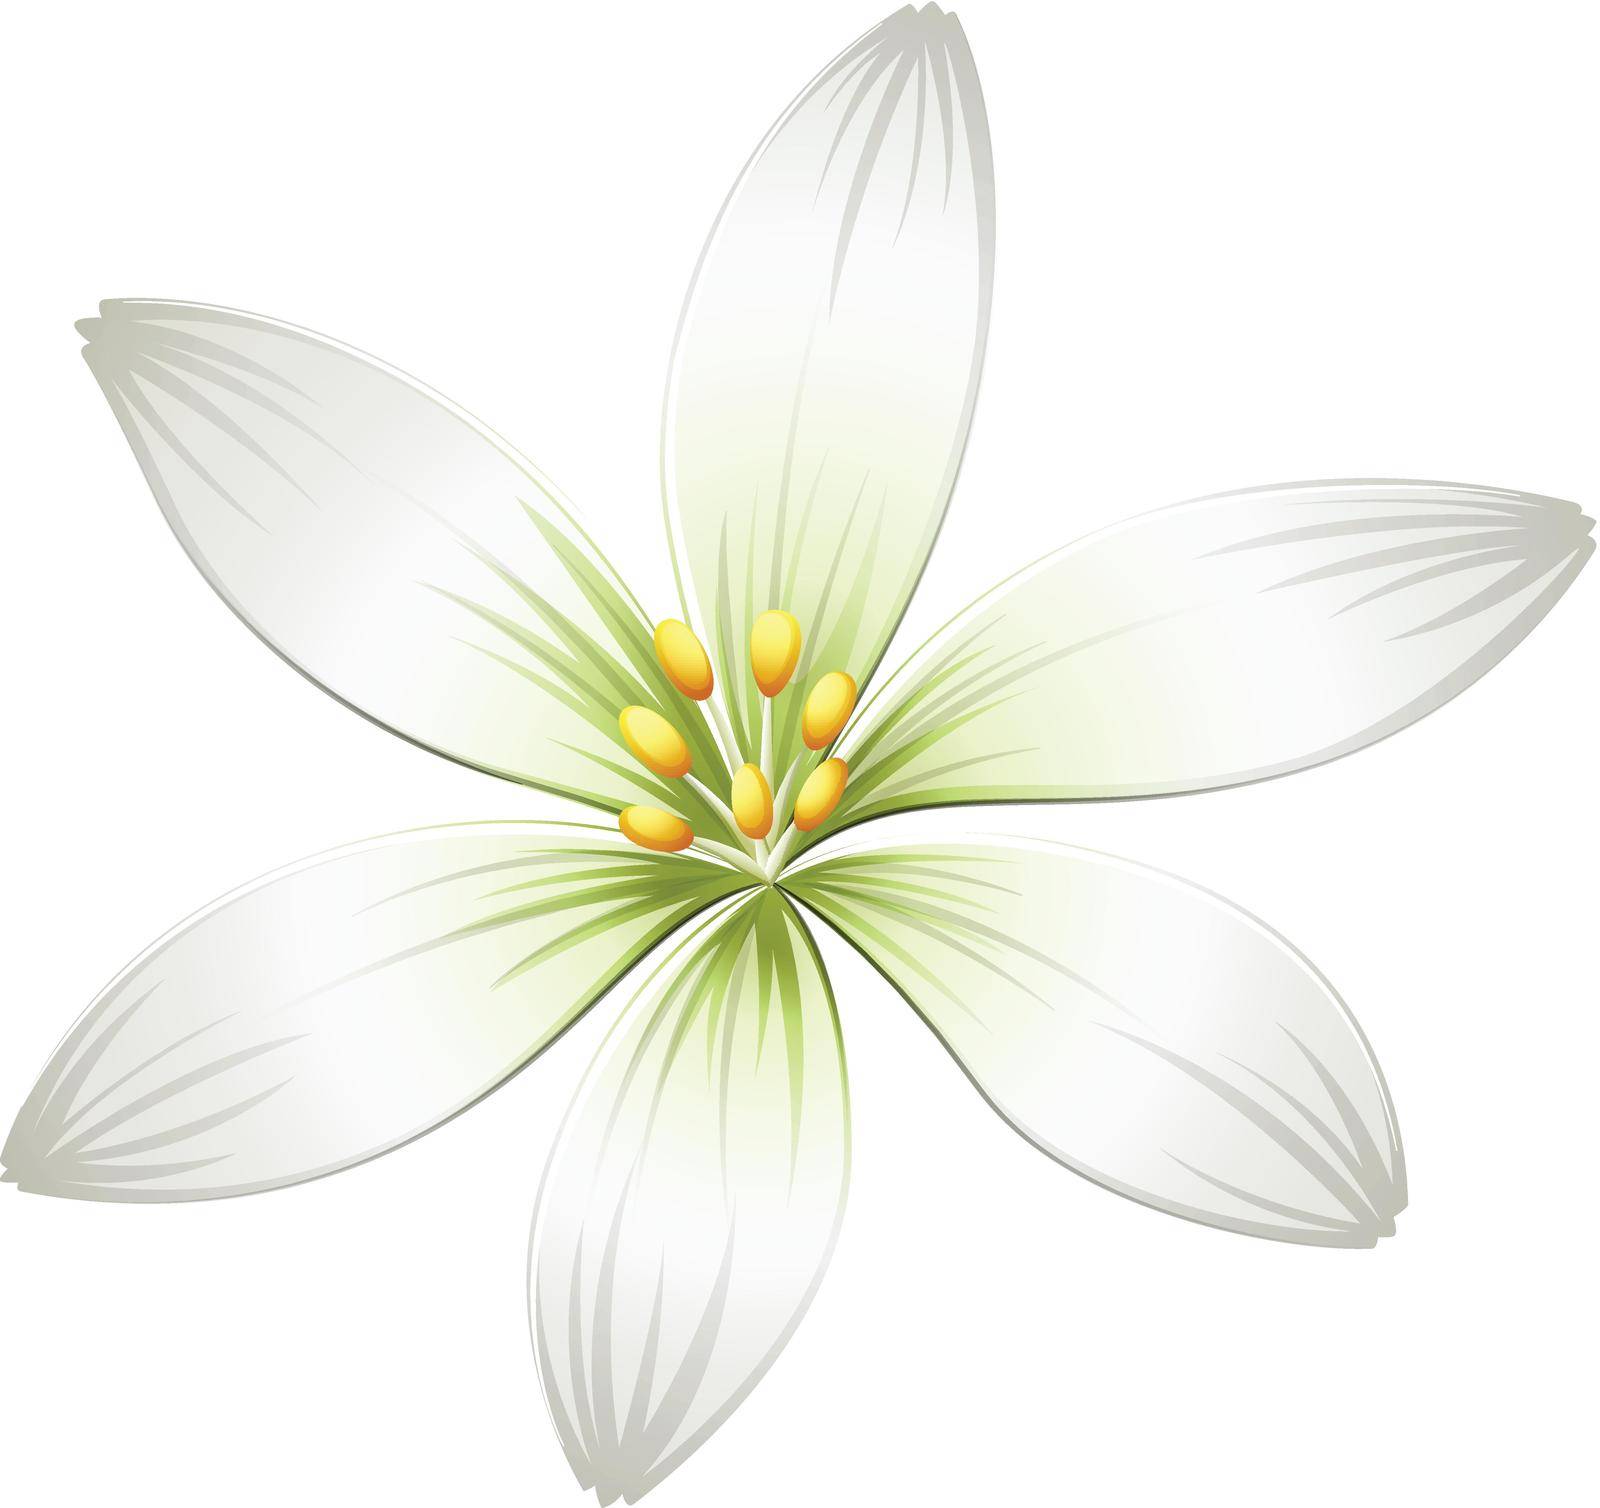 Illustration of a fresh white flower on a white background